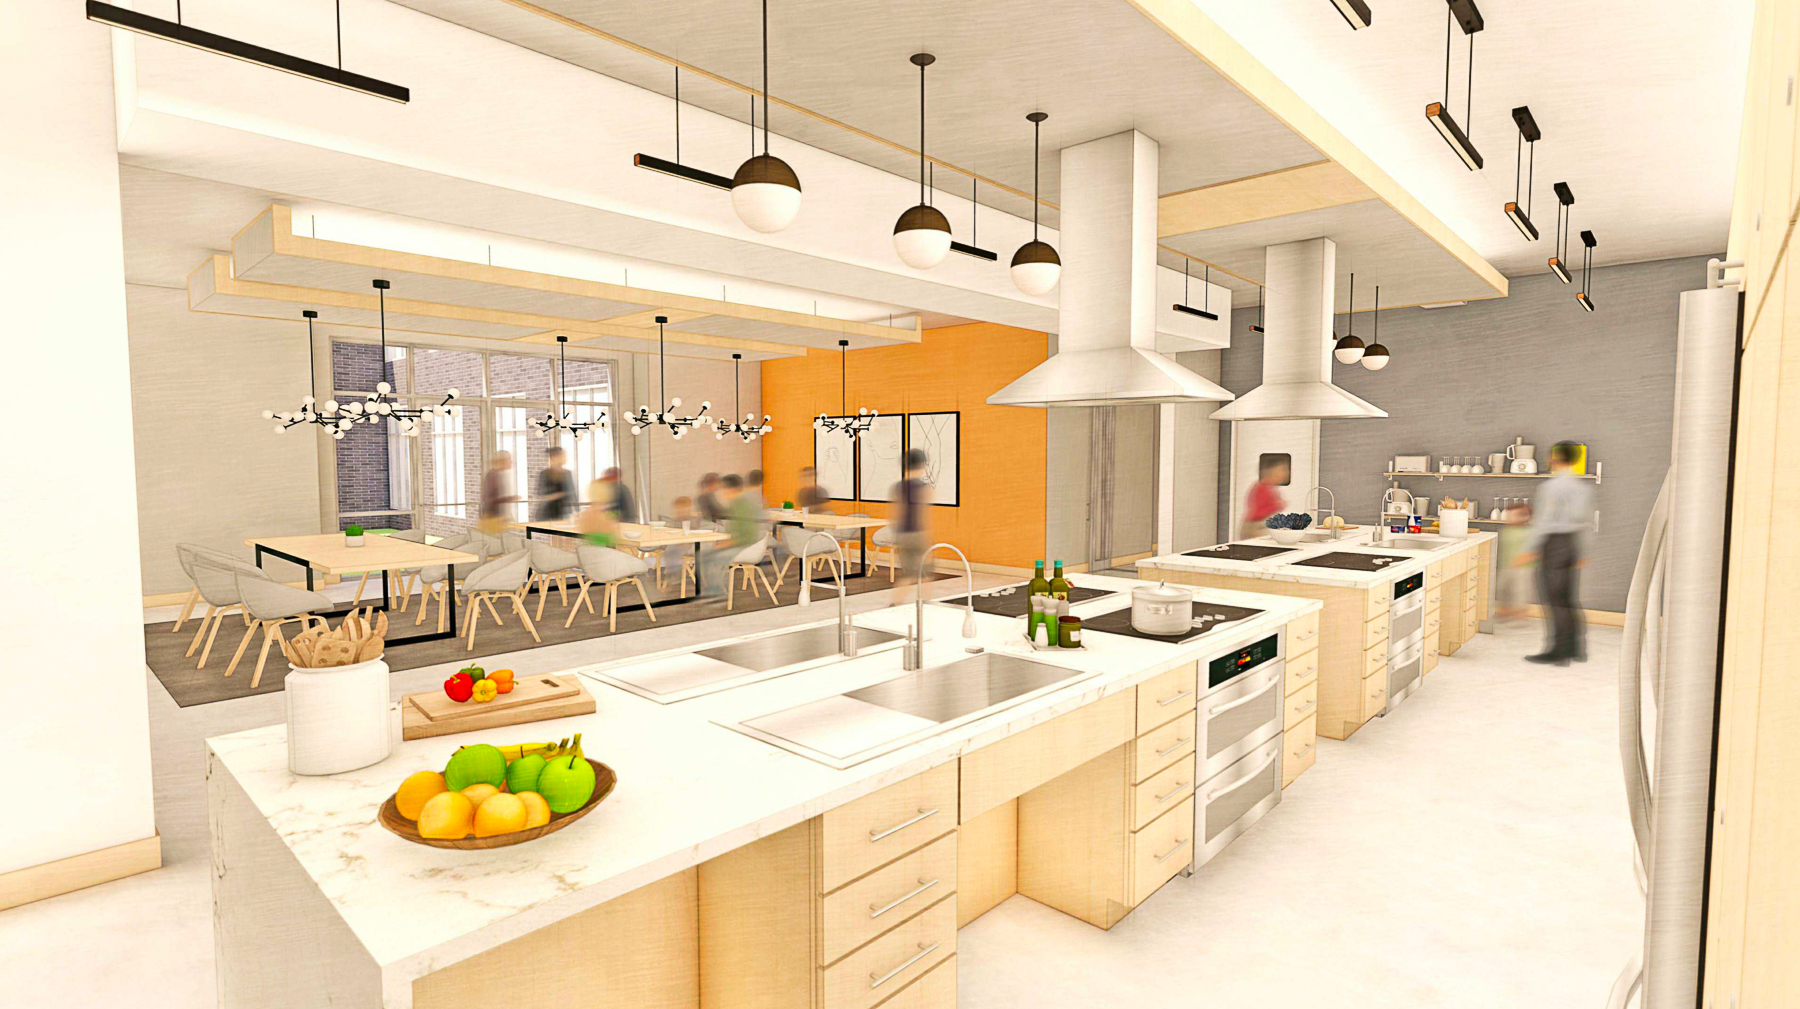 401 South Van Ness Avenue shared kitchen concept, illustration by Prime Design